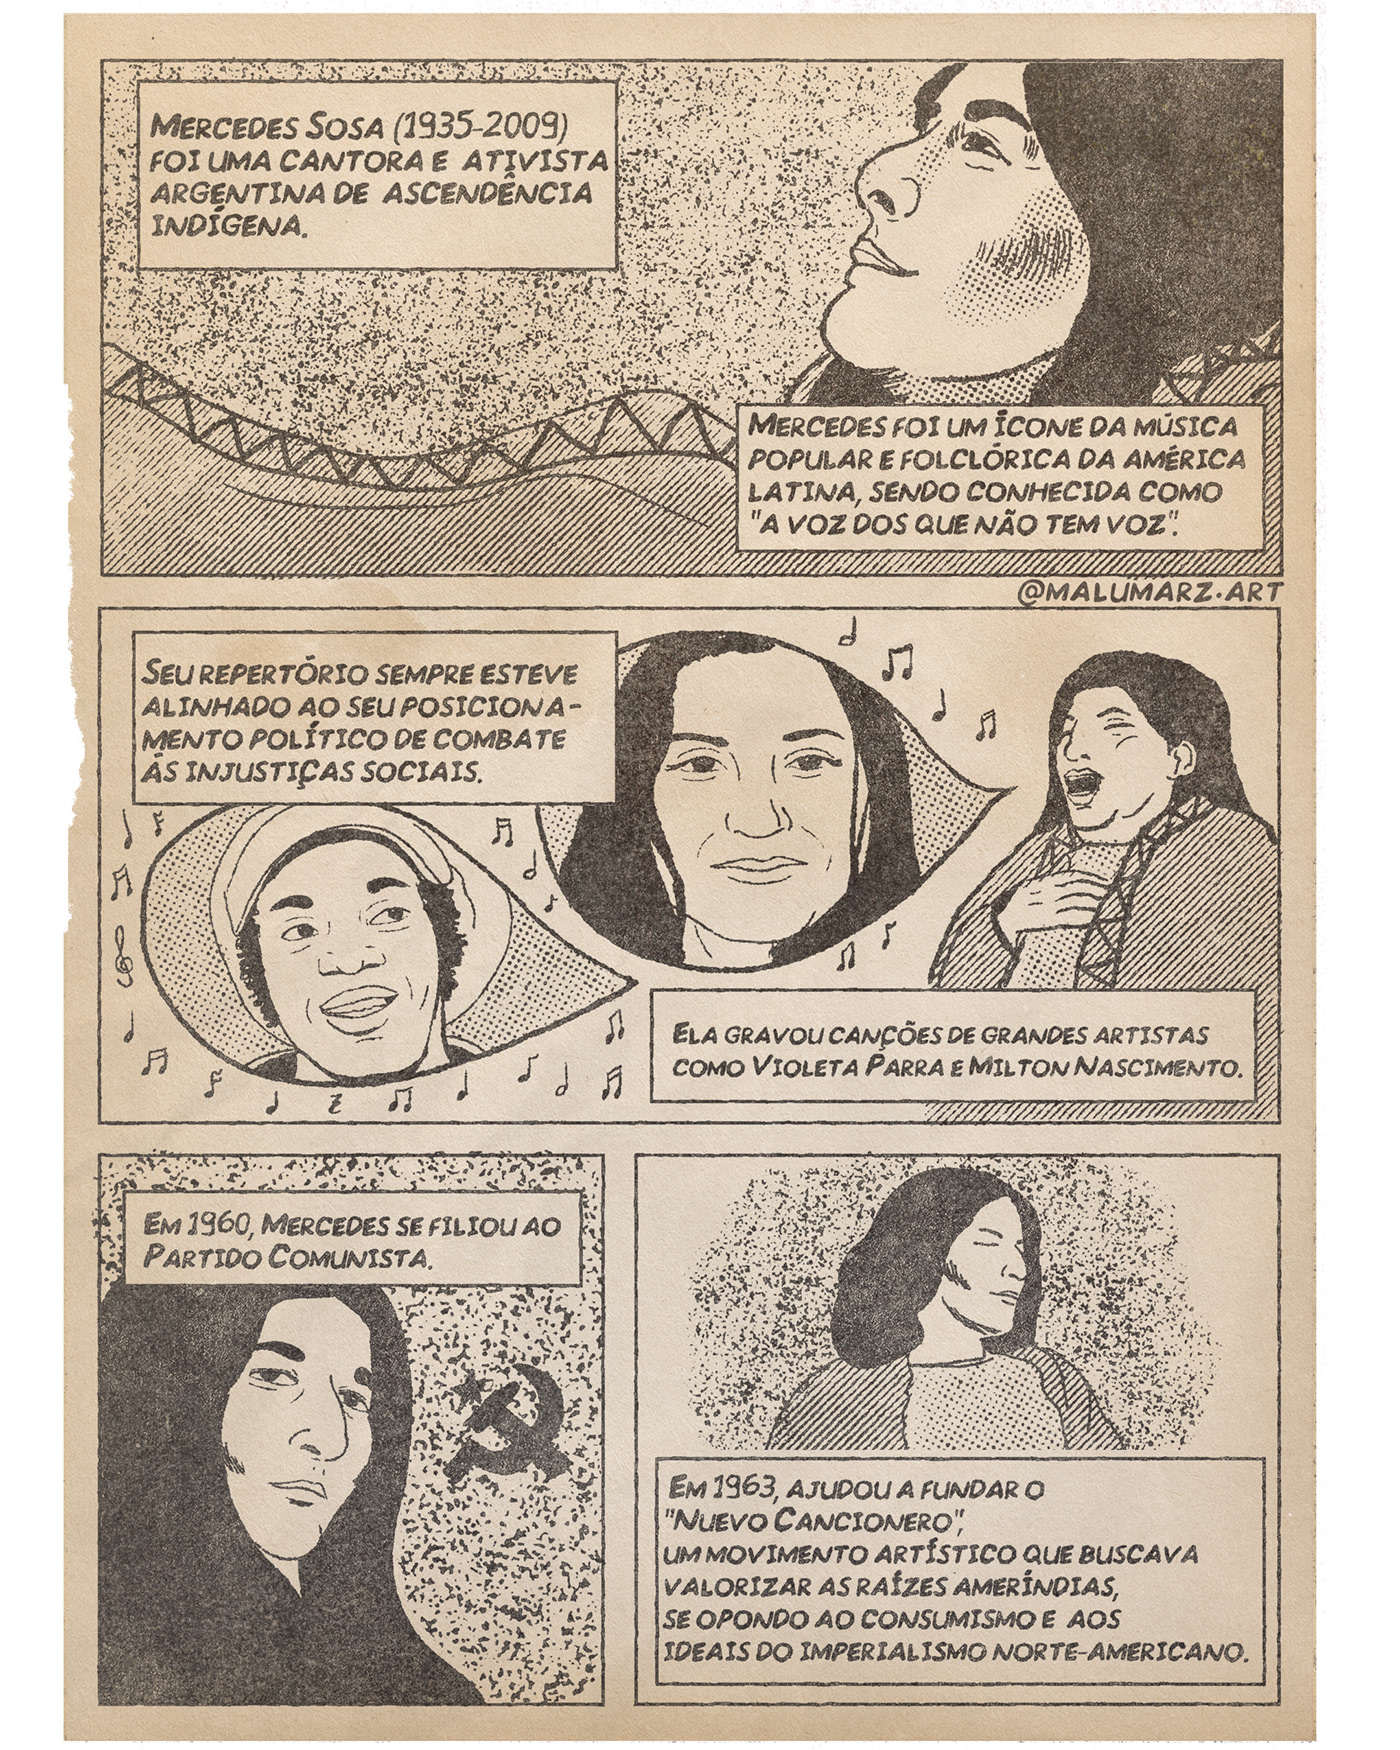 comics cover digital illustration ilustres mulheres mercedes sosa Retro vintage woman